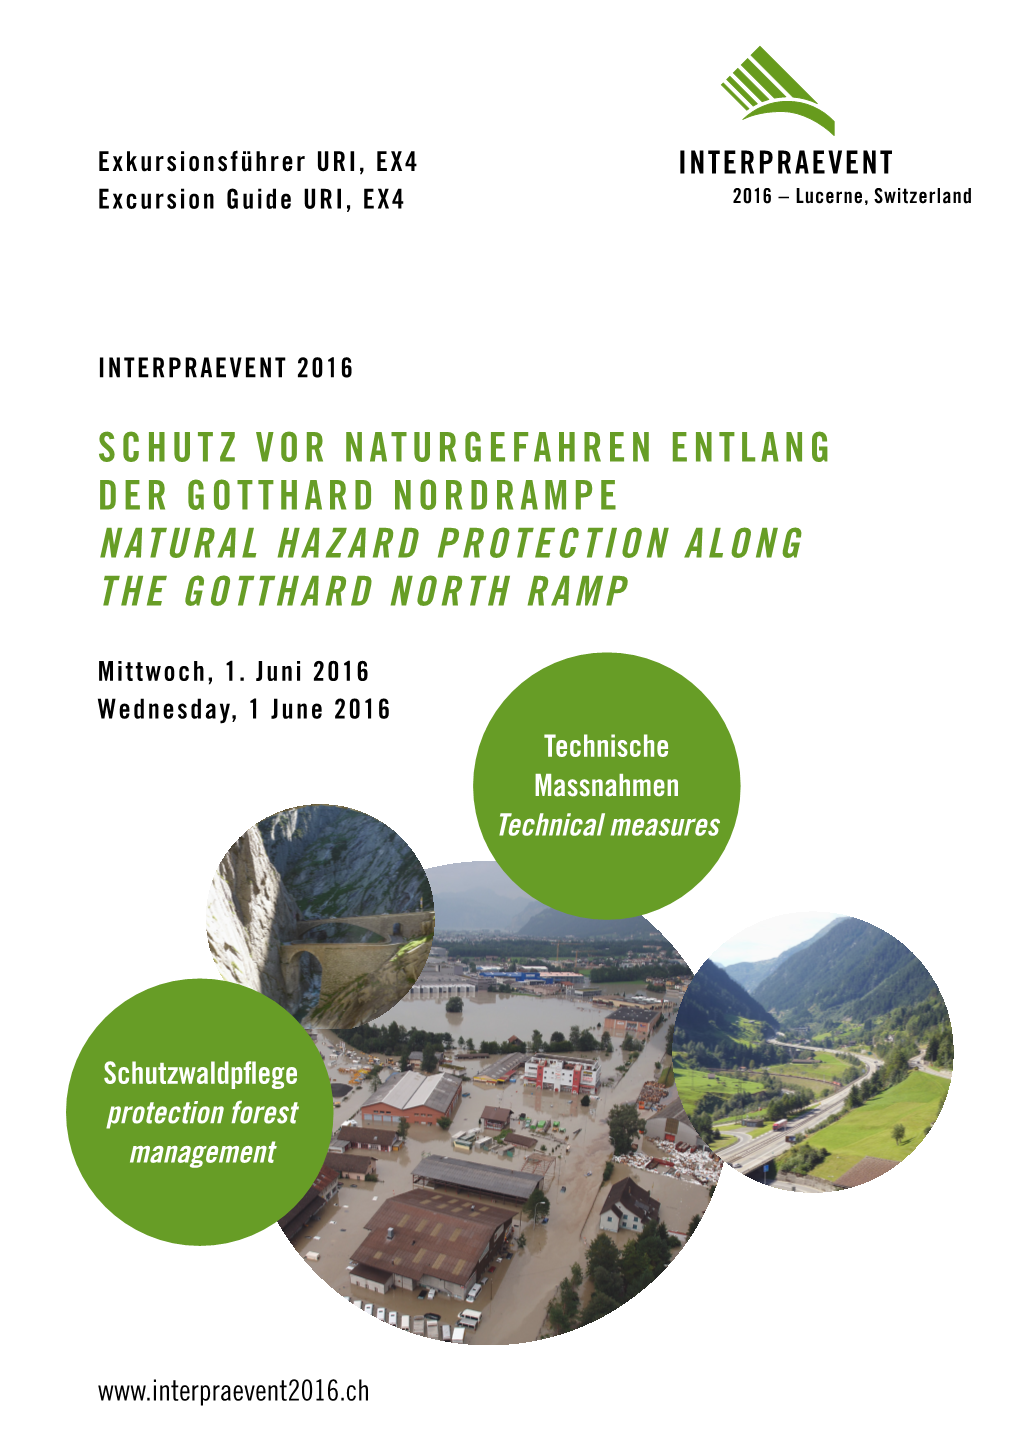 Schutz Vor Naturgefahren Entlang Der Gotthard Nordrampe Natural Hazard Protection Along the Gotthard North Ramp